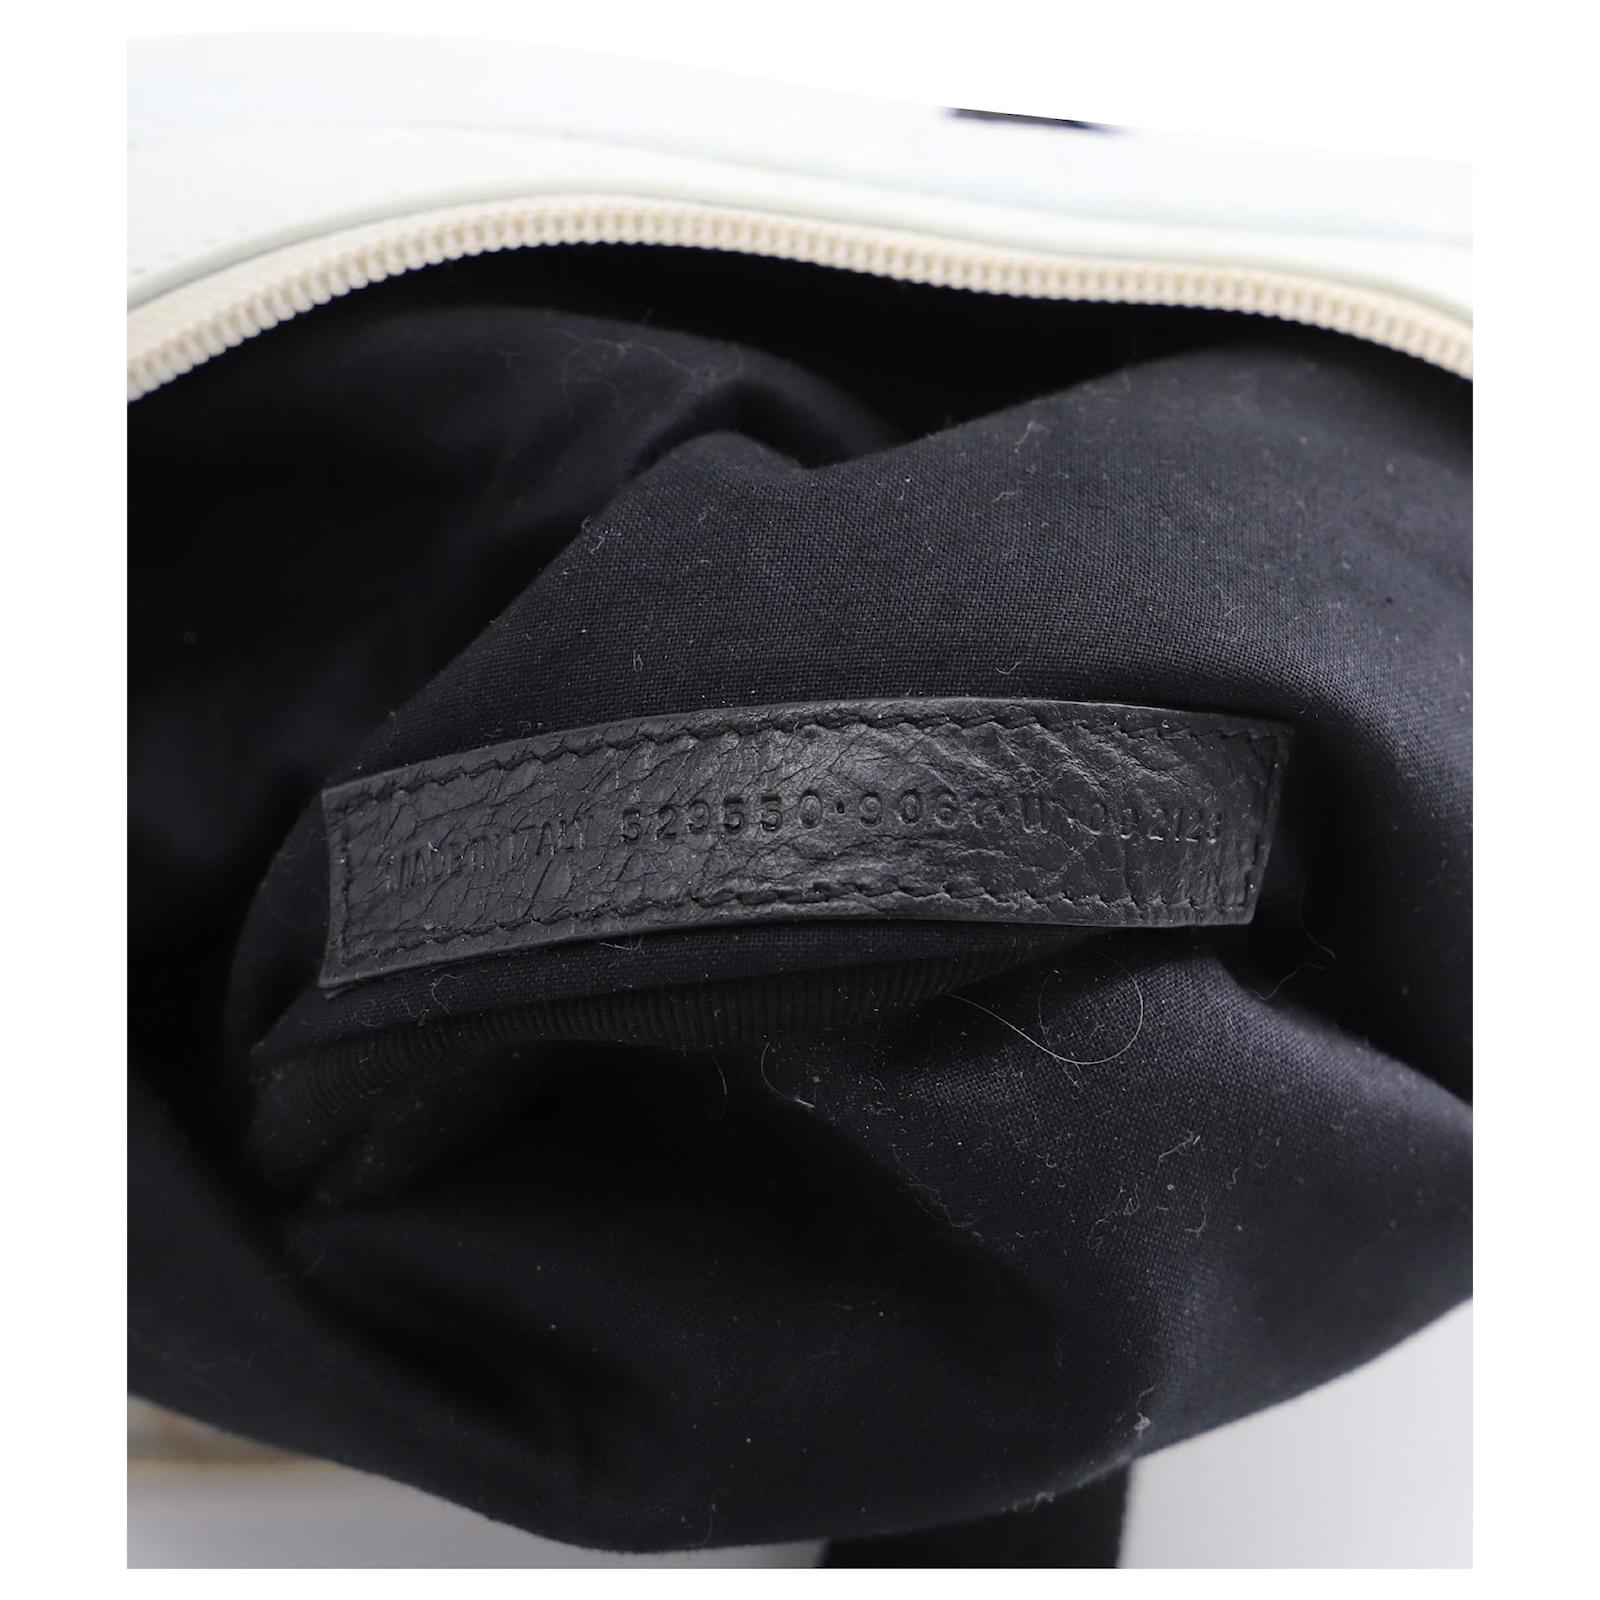 Balenciaga Graffiti-Print Belt Bag in White Leather ref.691952